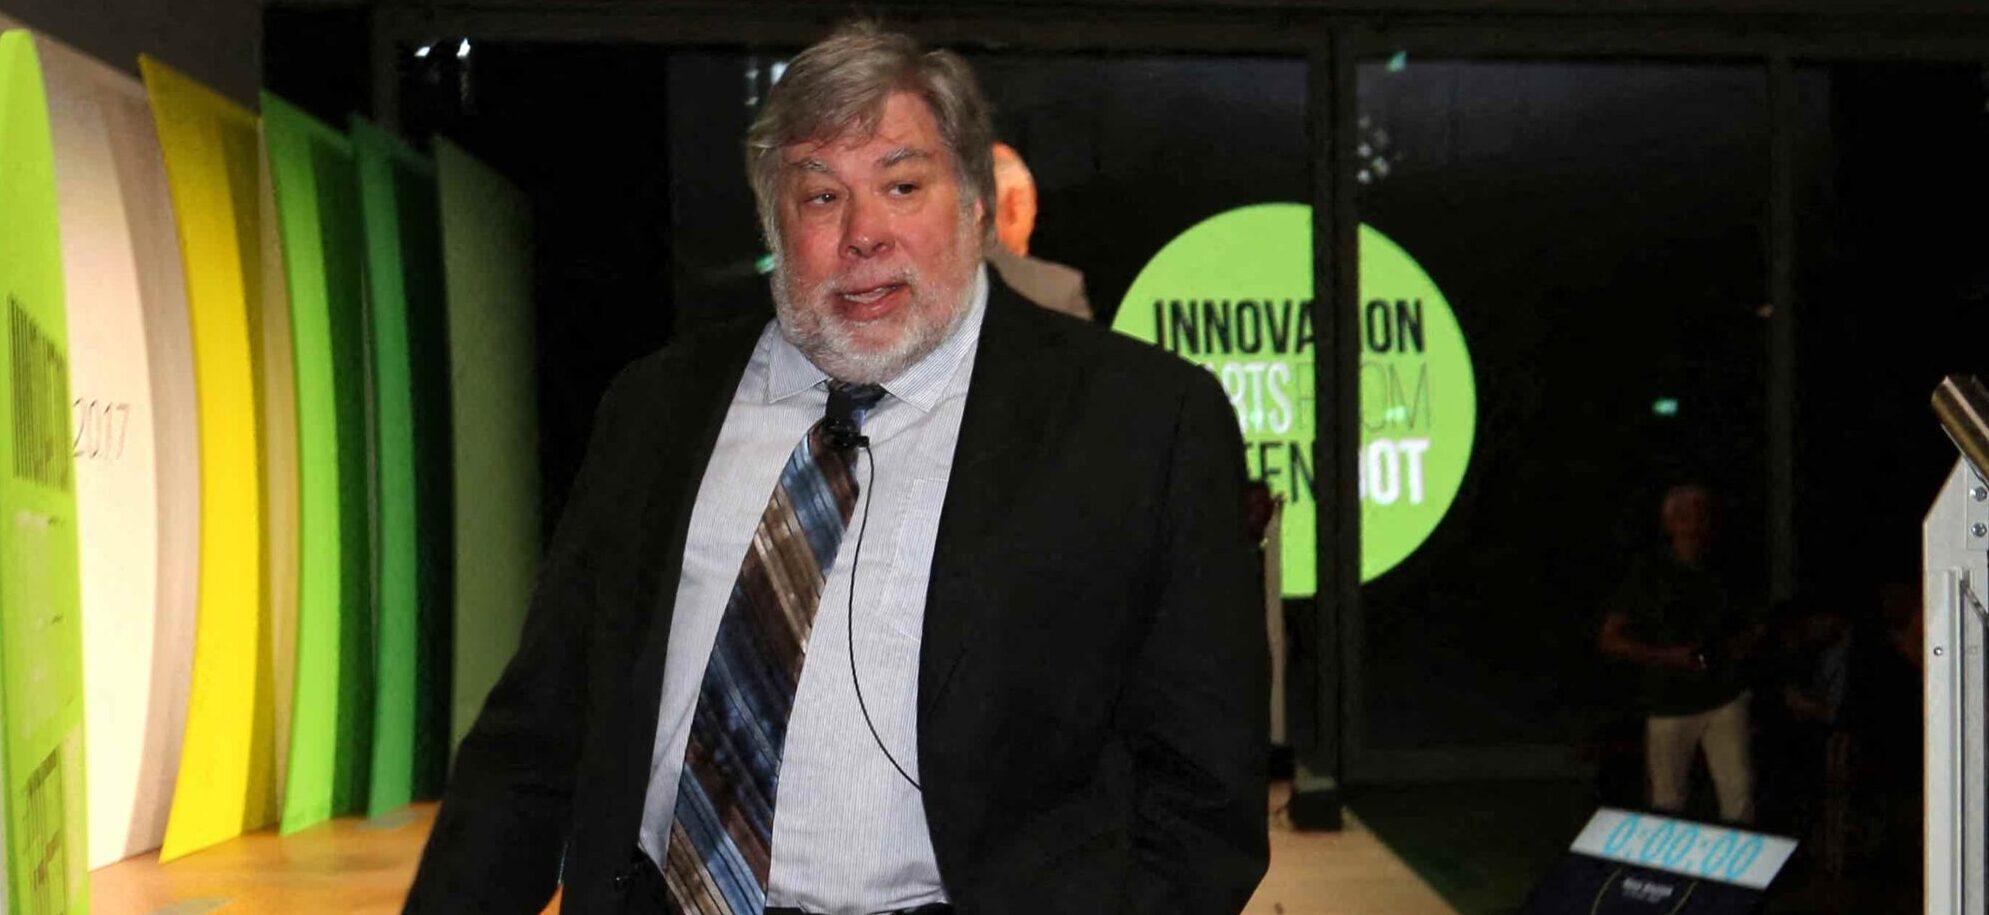 Apple Co-Founder Steve Wozniak Hospitalized After Medical Emergency